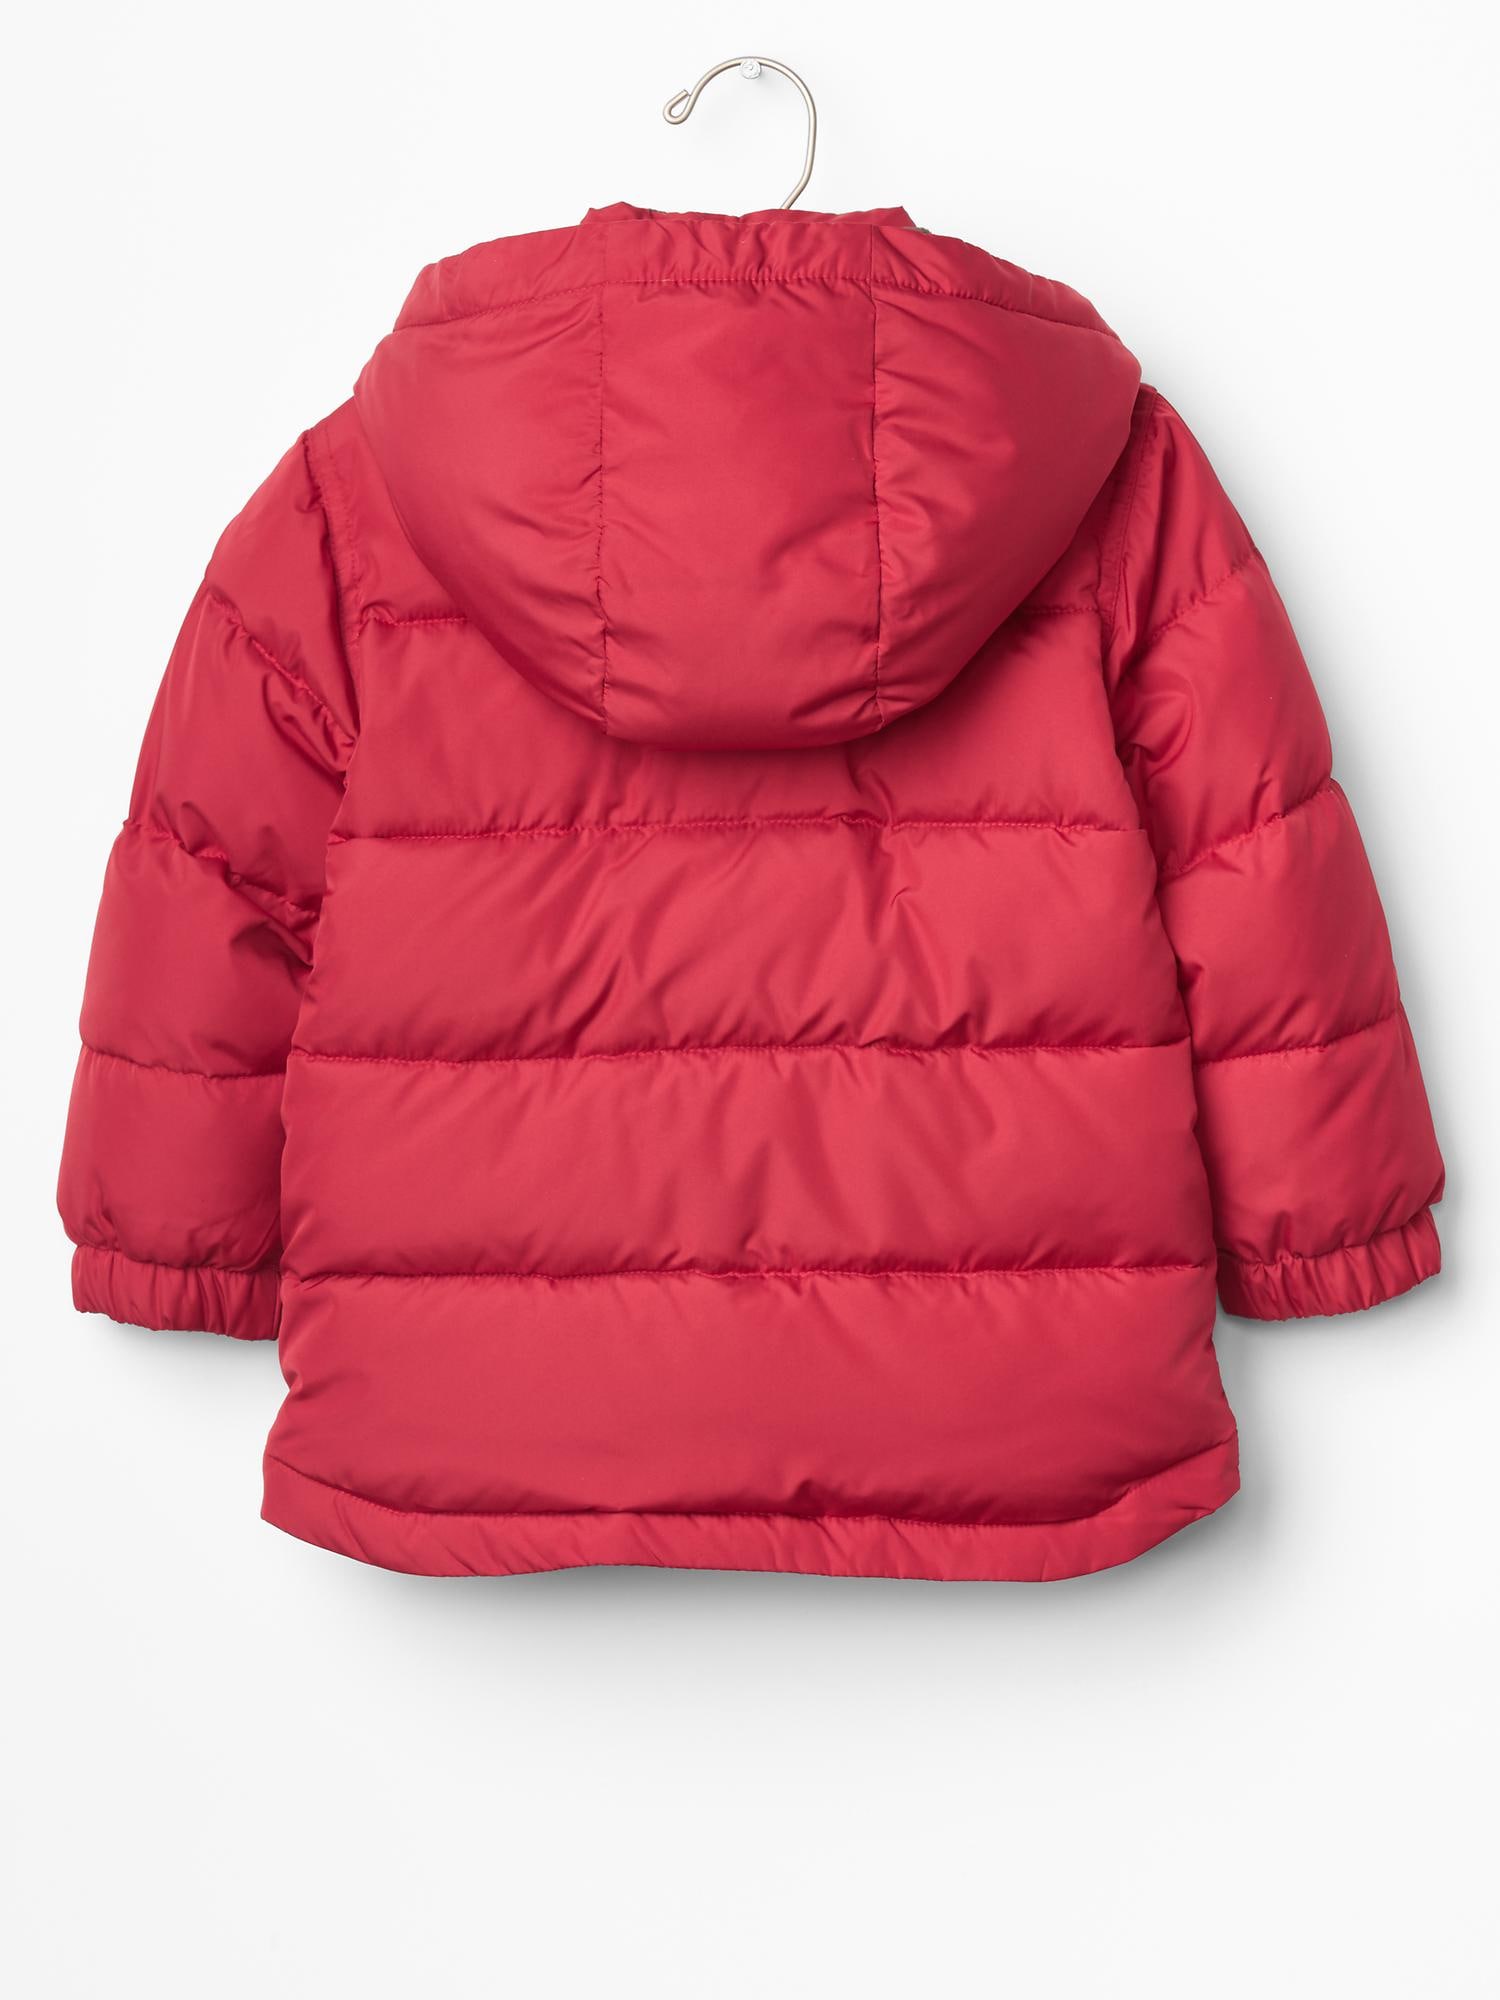 PrimaLoft® Luxe puffer jacket | Gap